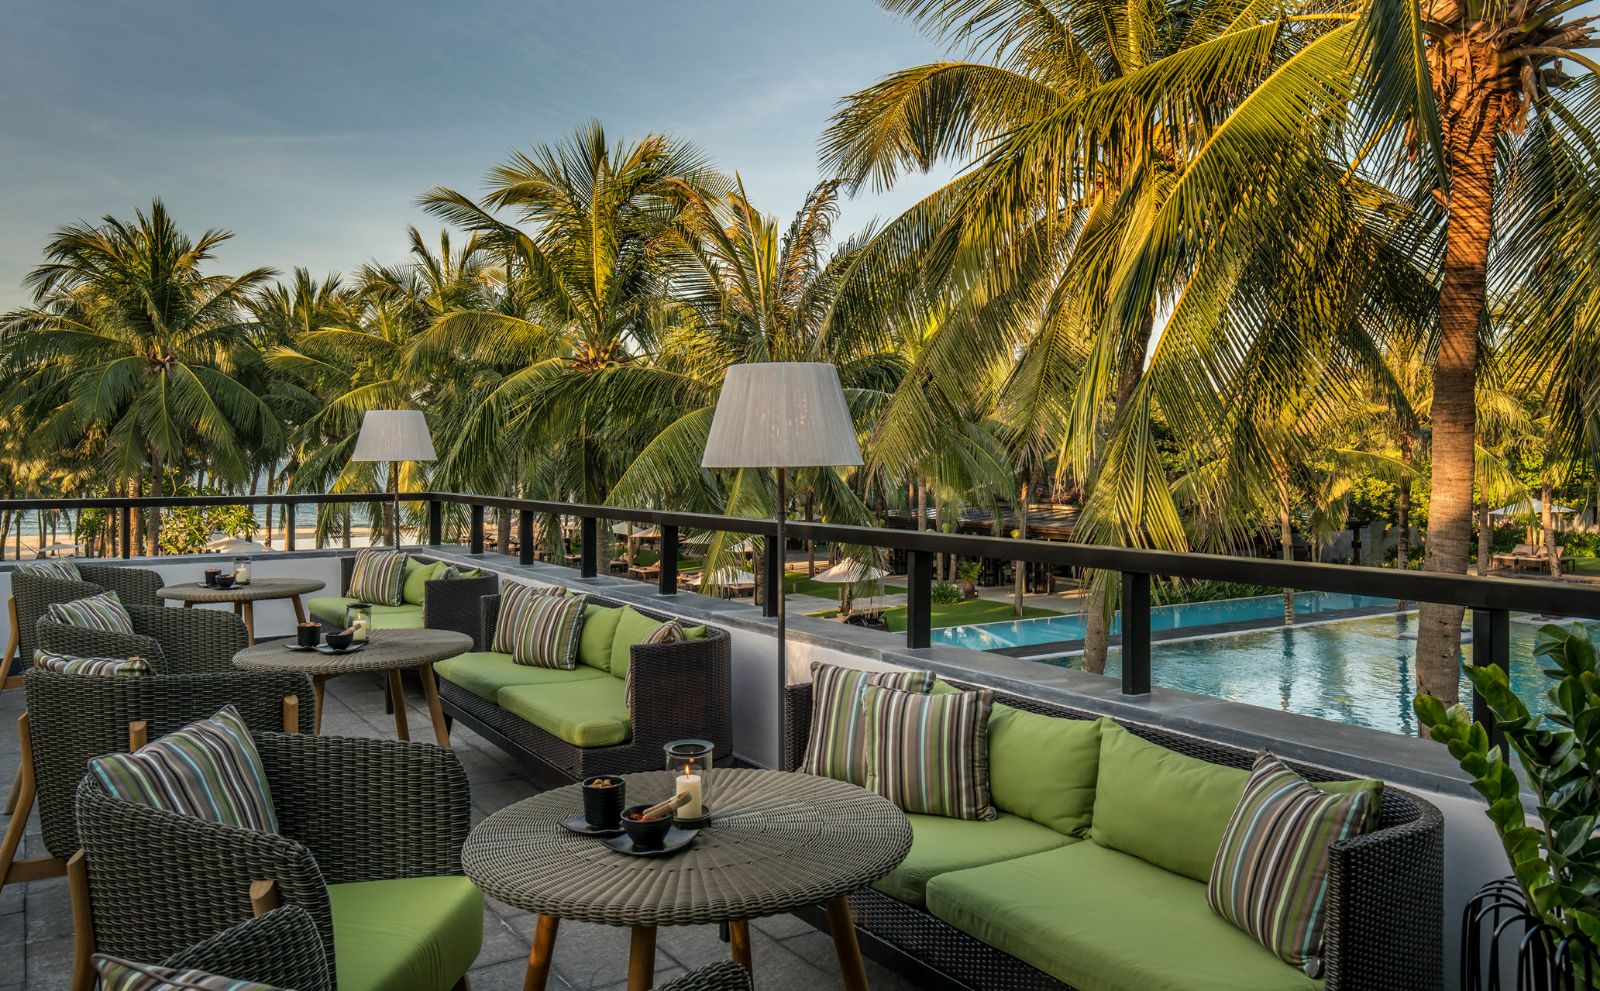 Rooftop seating area overlooking the main pool at luxury resort Four Seasons Nam Hai 